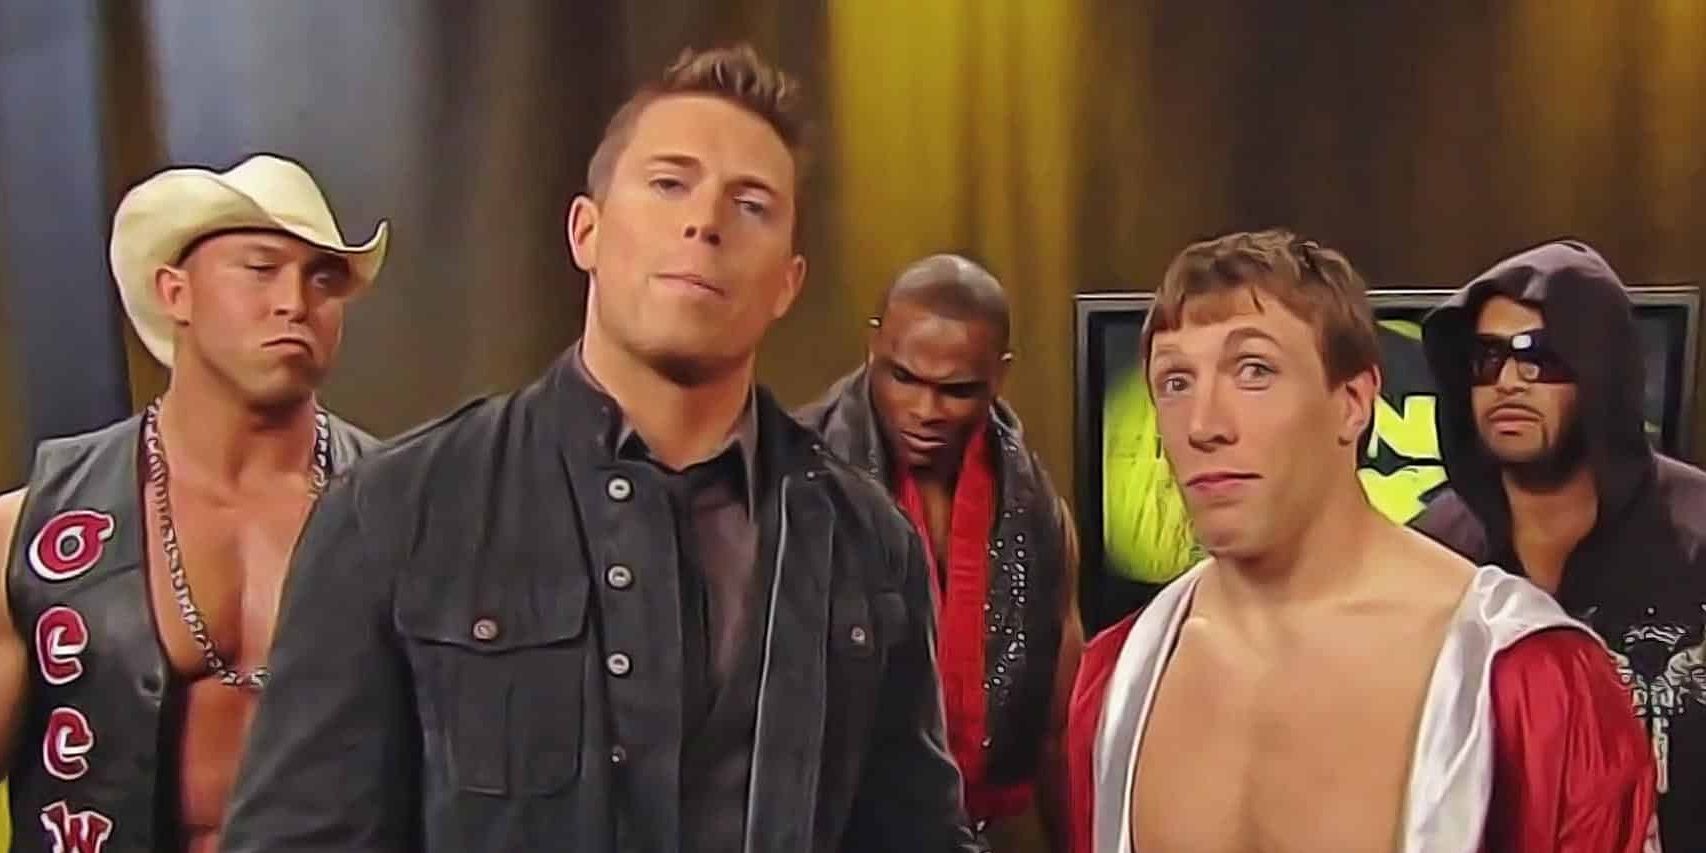 The Miz served as Daniel Bryan's mentor during NXT Season 1.